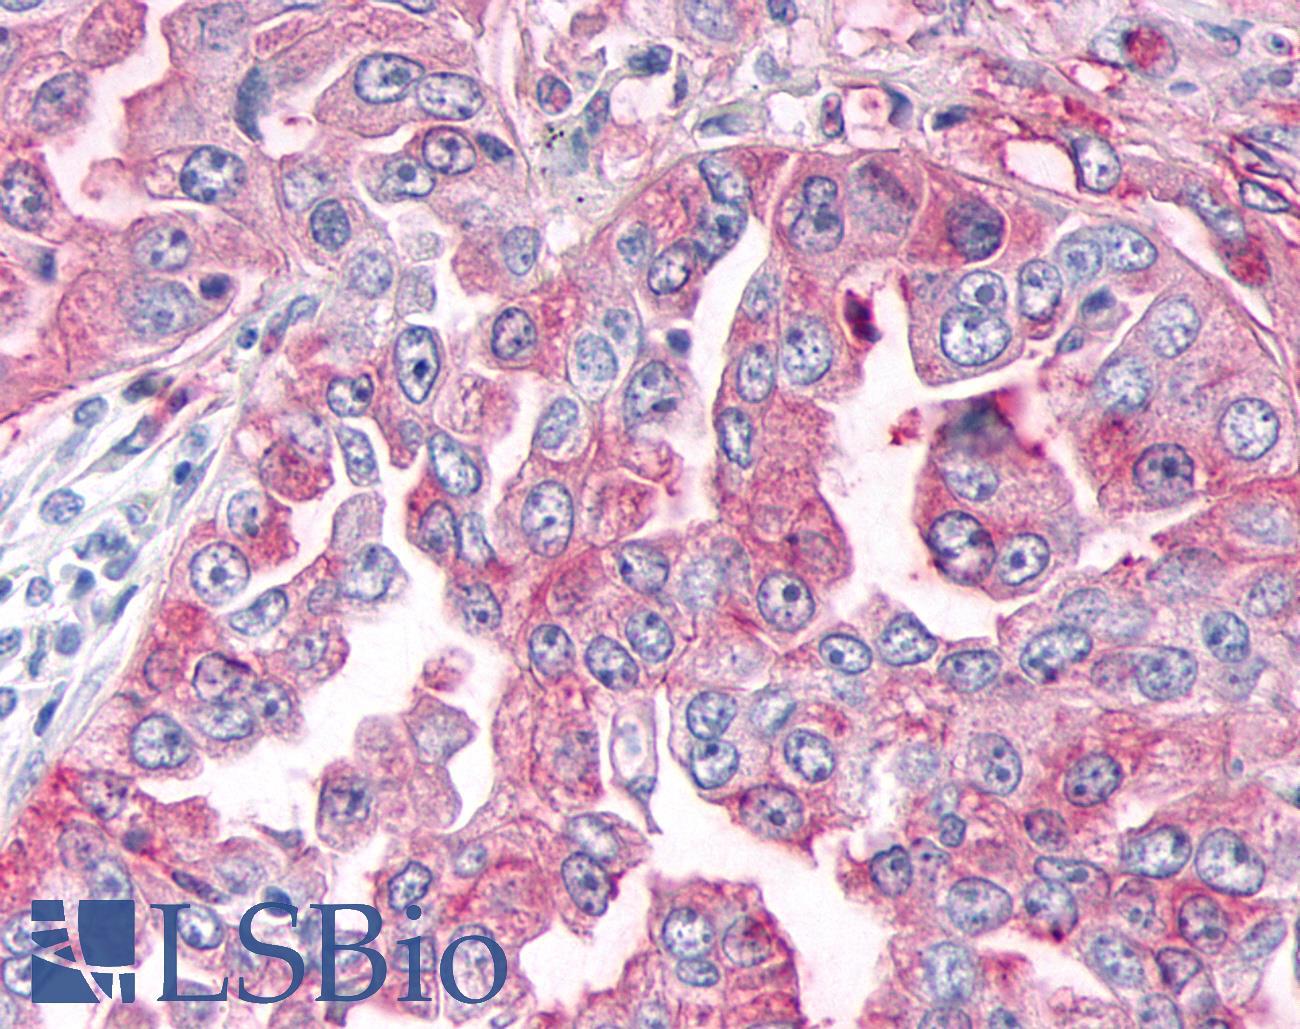 ADAMTS4 Antibody - Lung, Non Small-Cell Carcinoma